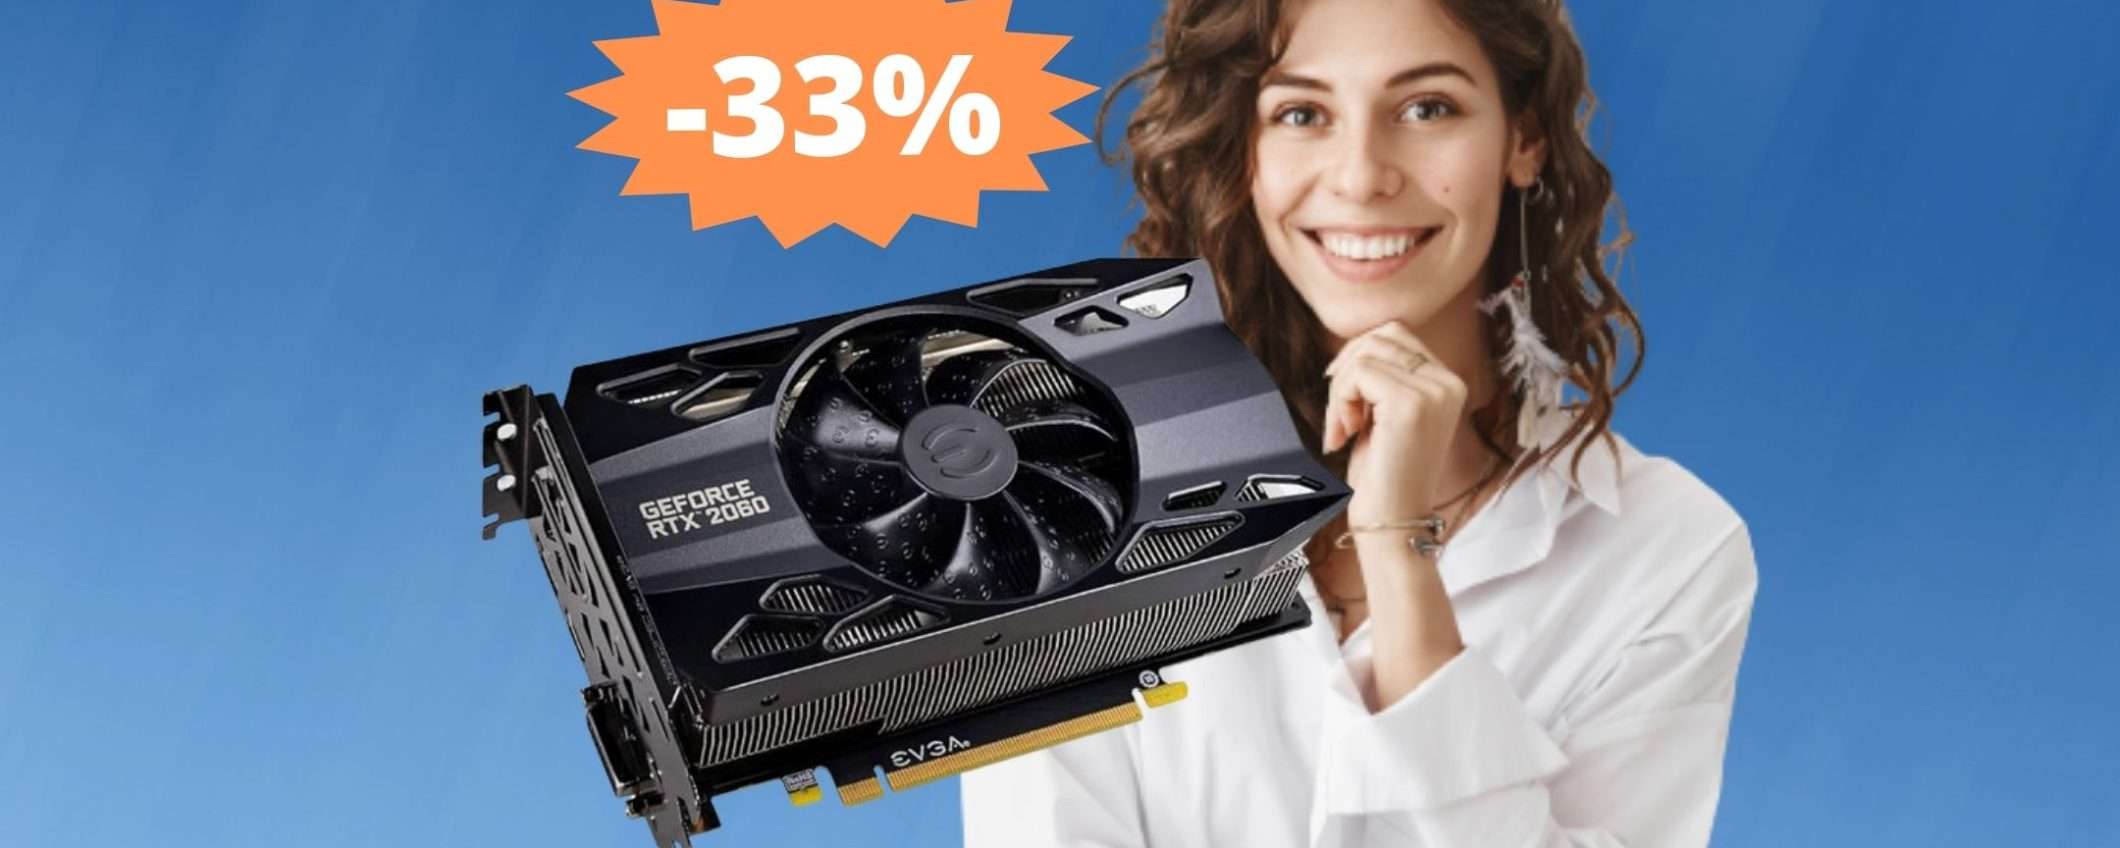 Scheda grafica GeForce RTX 2060: MEGA sconto del 33%